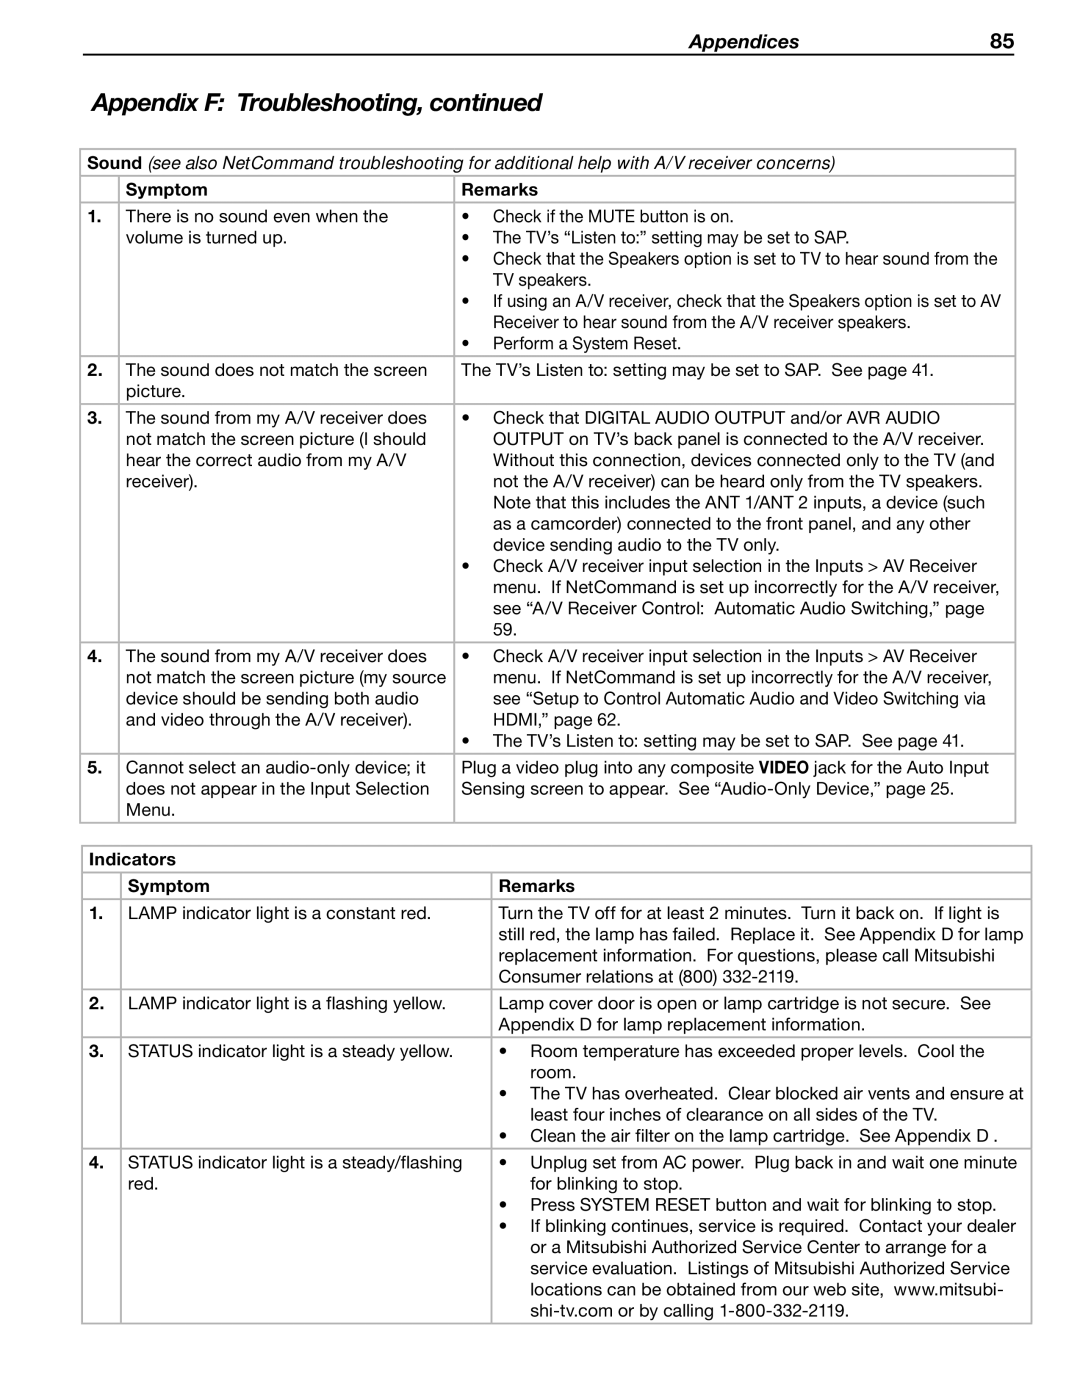 Mitsubishi Electronics WD-60C8 manual Indicators Symptom Remarks 